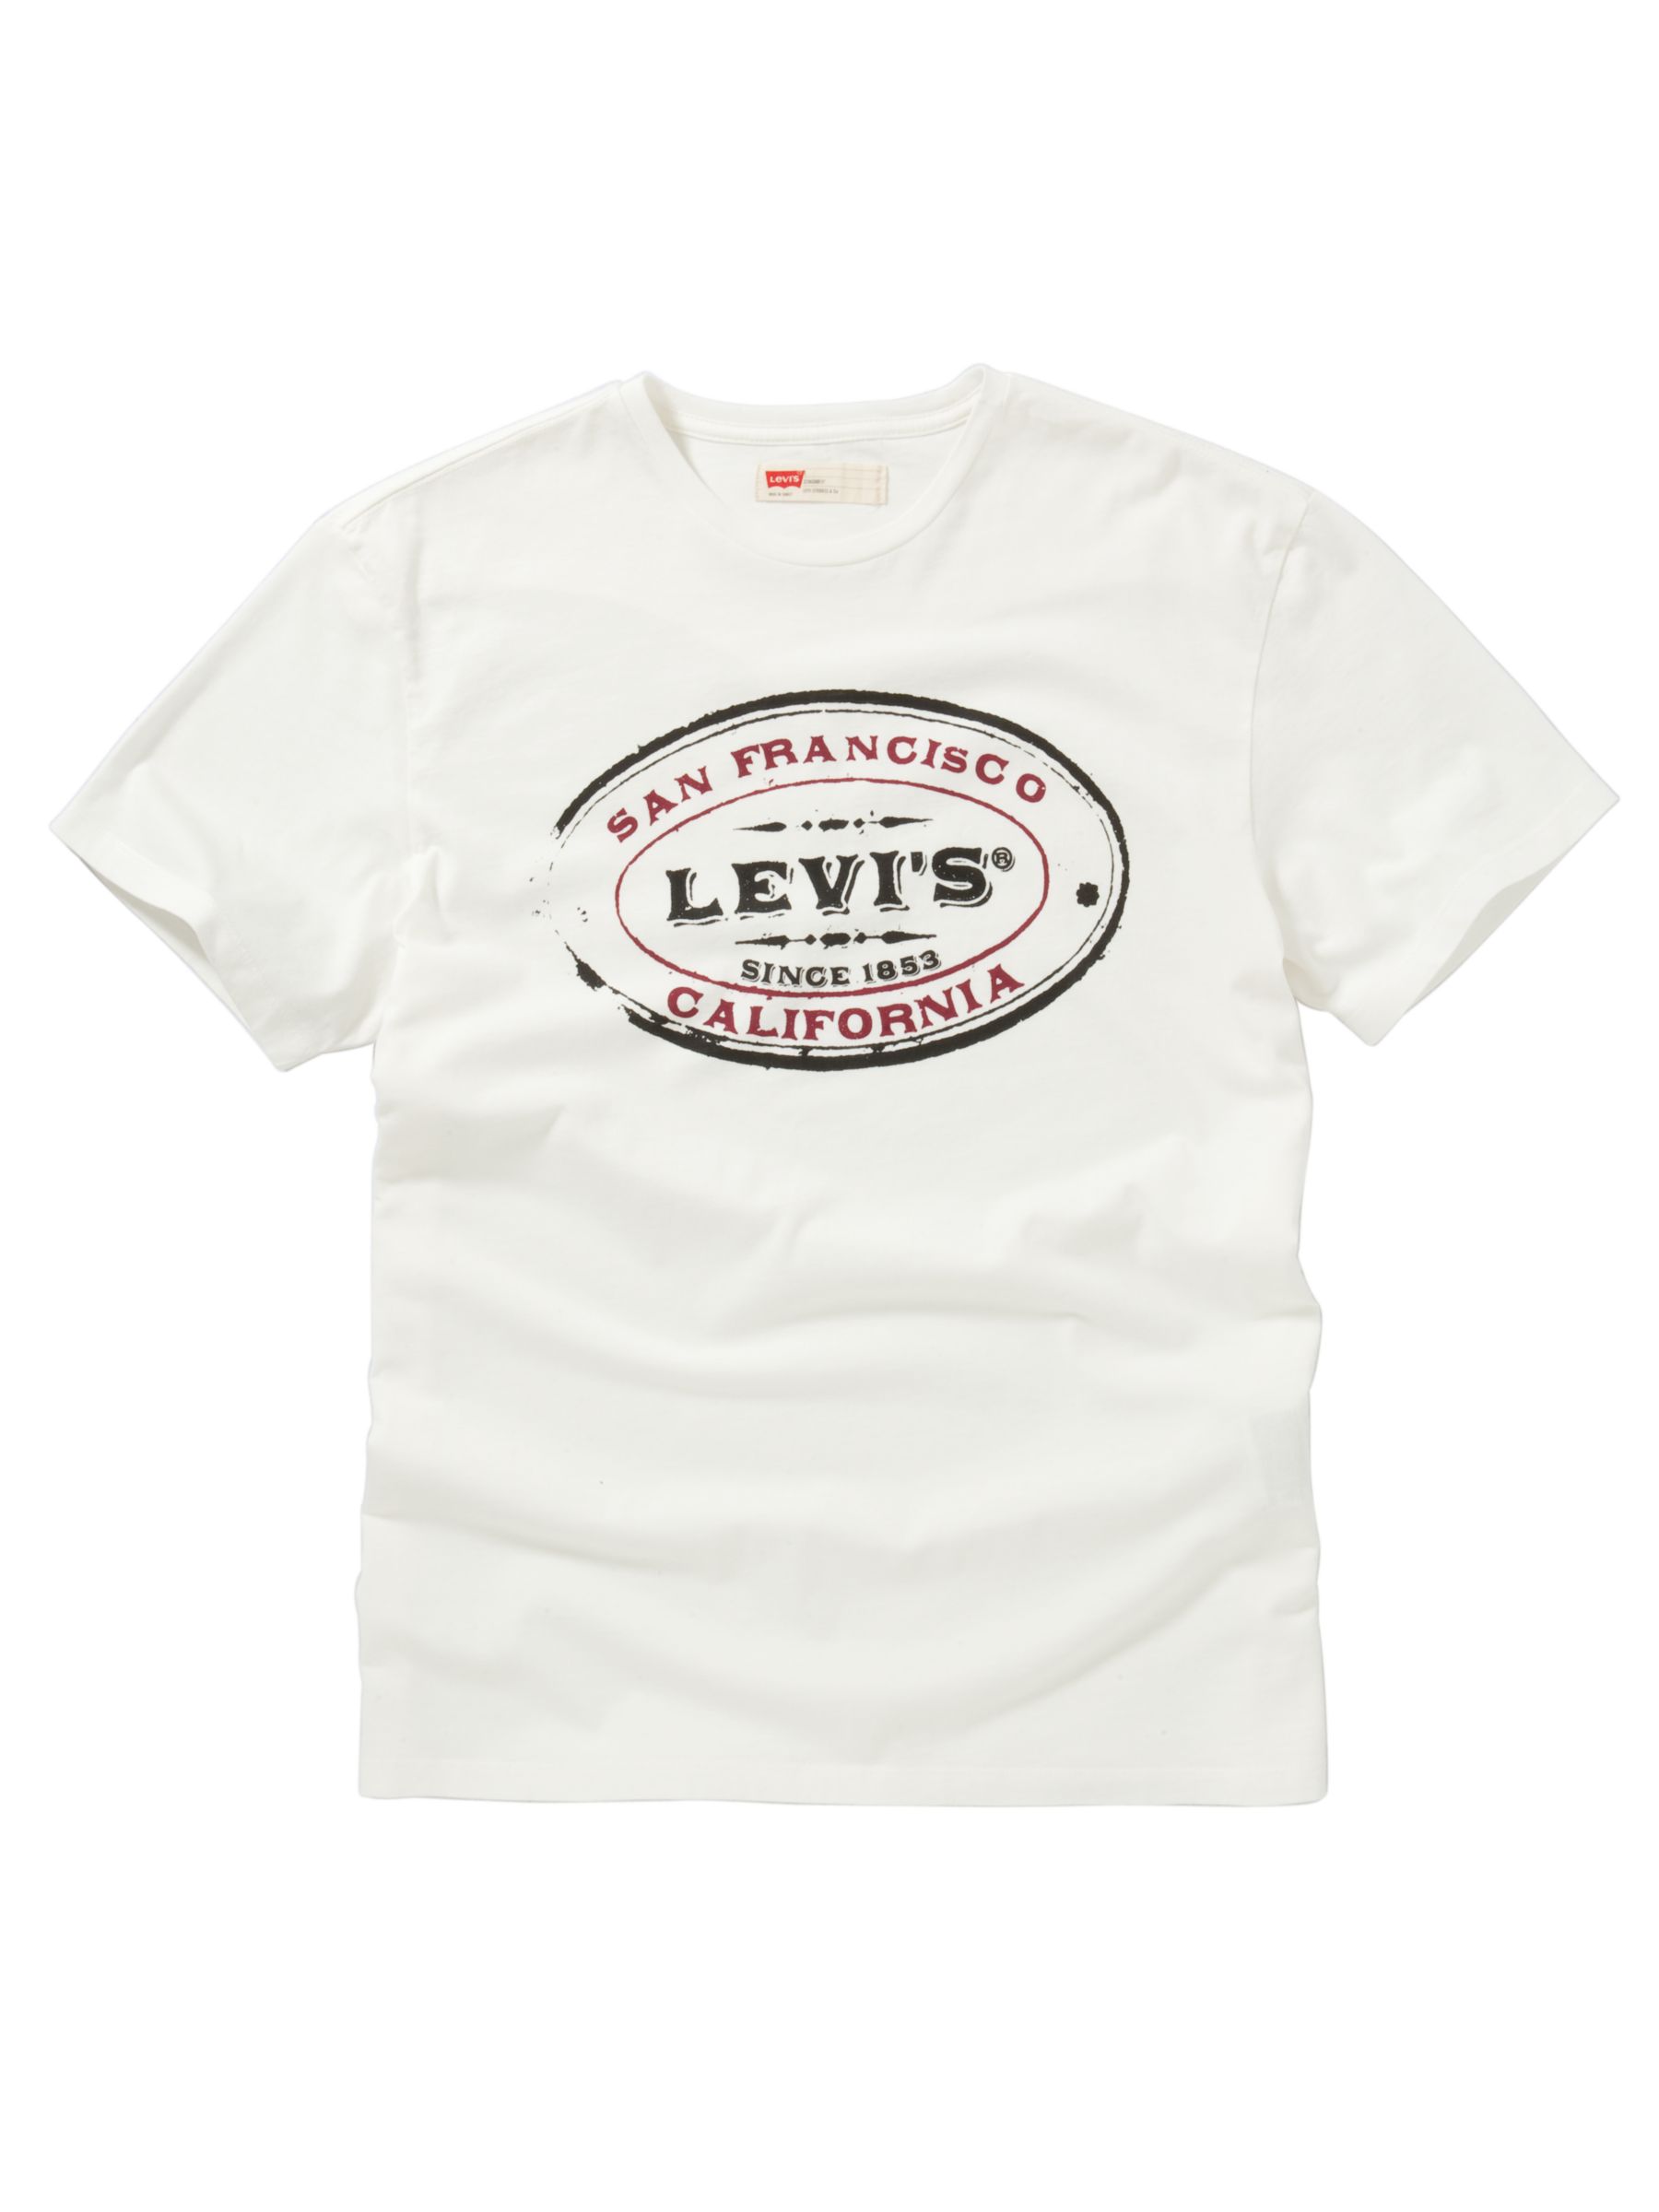 Levi’s San Francisco Logo T-Shirt, White